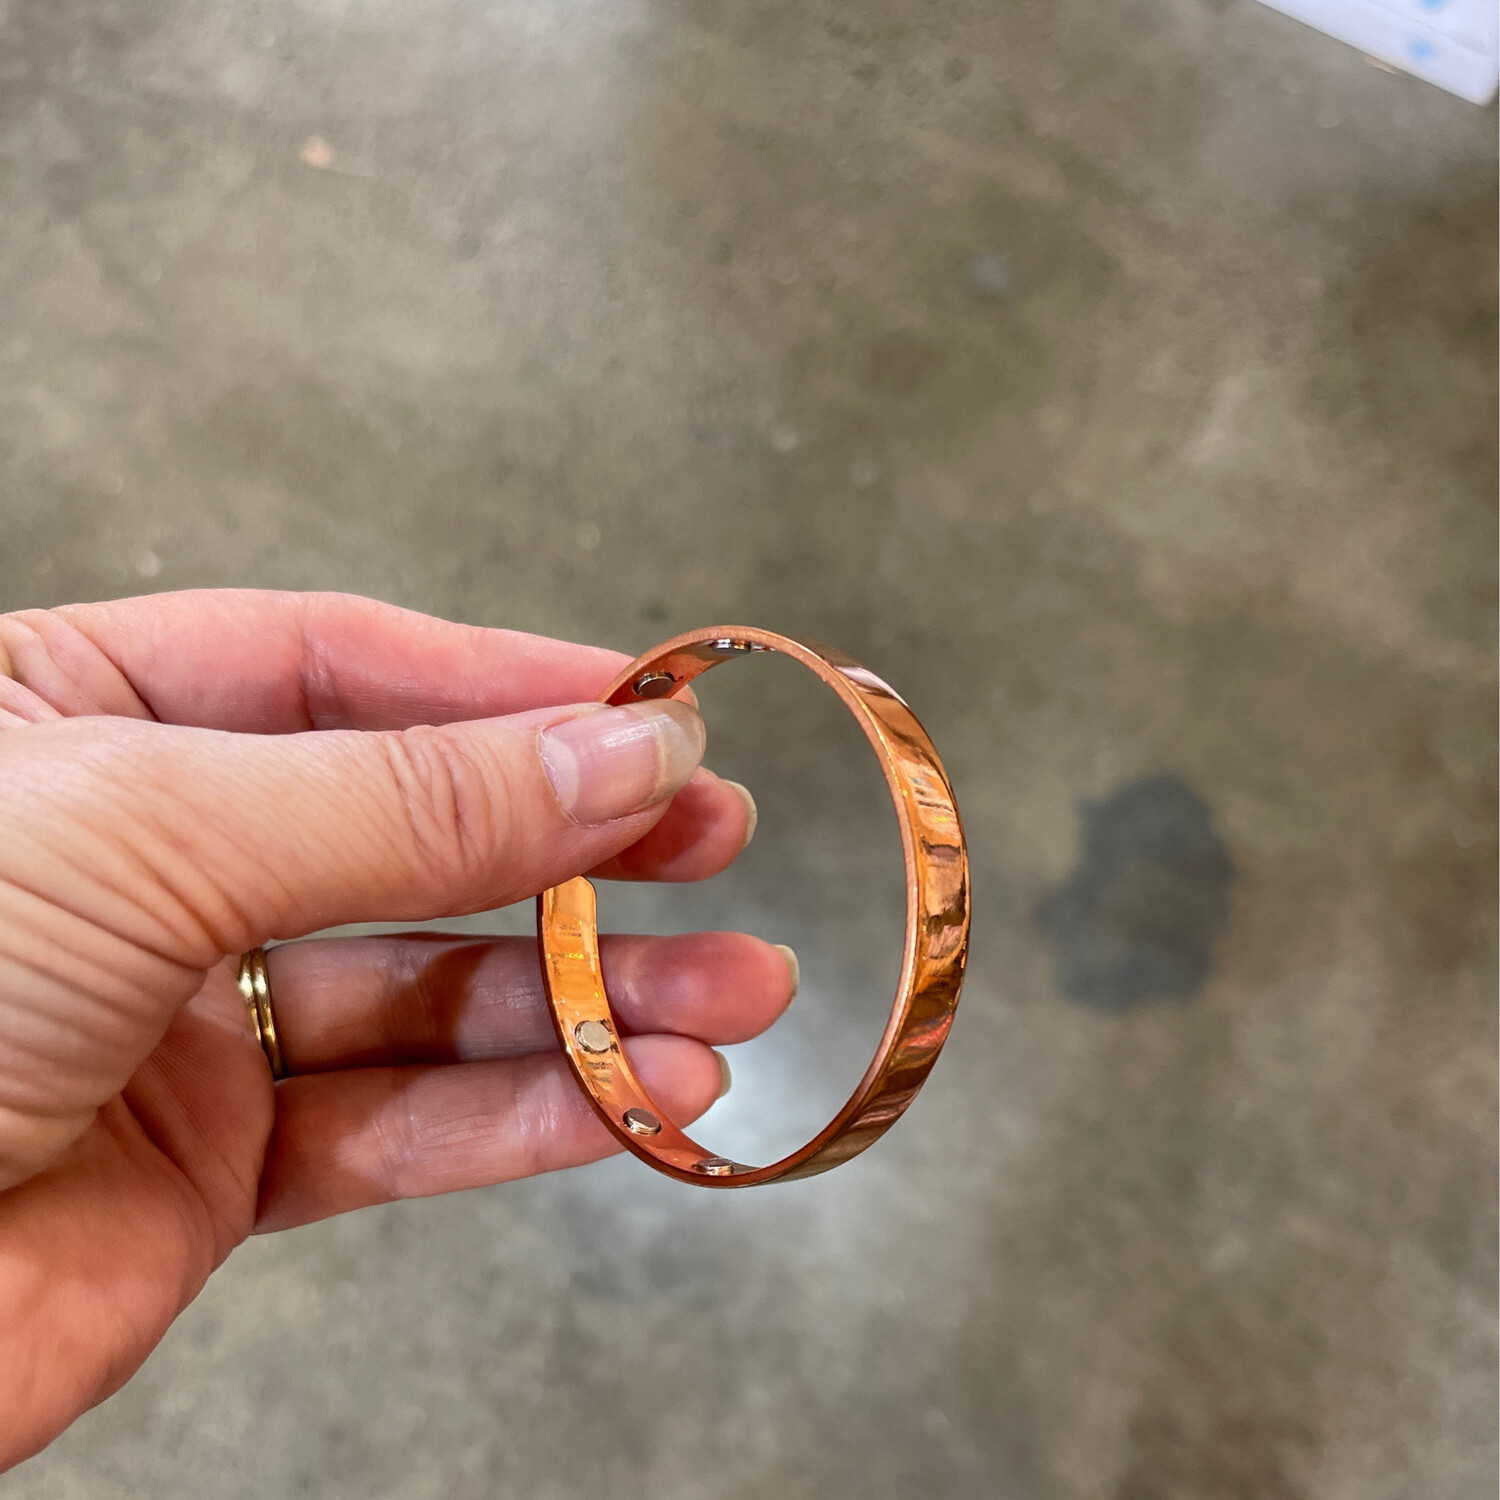 Copper Bangle Bracelet With Magnets